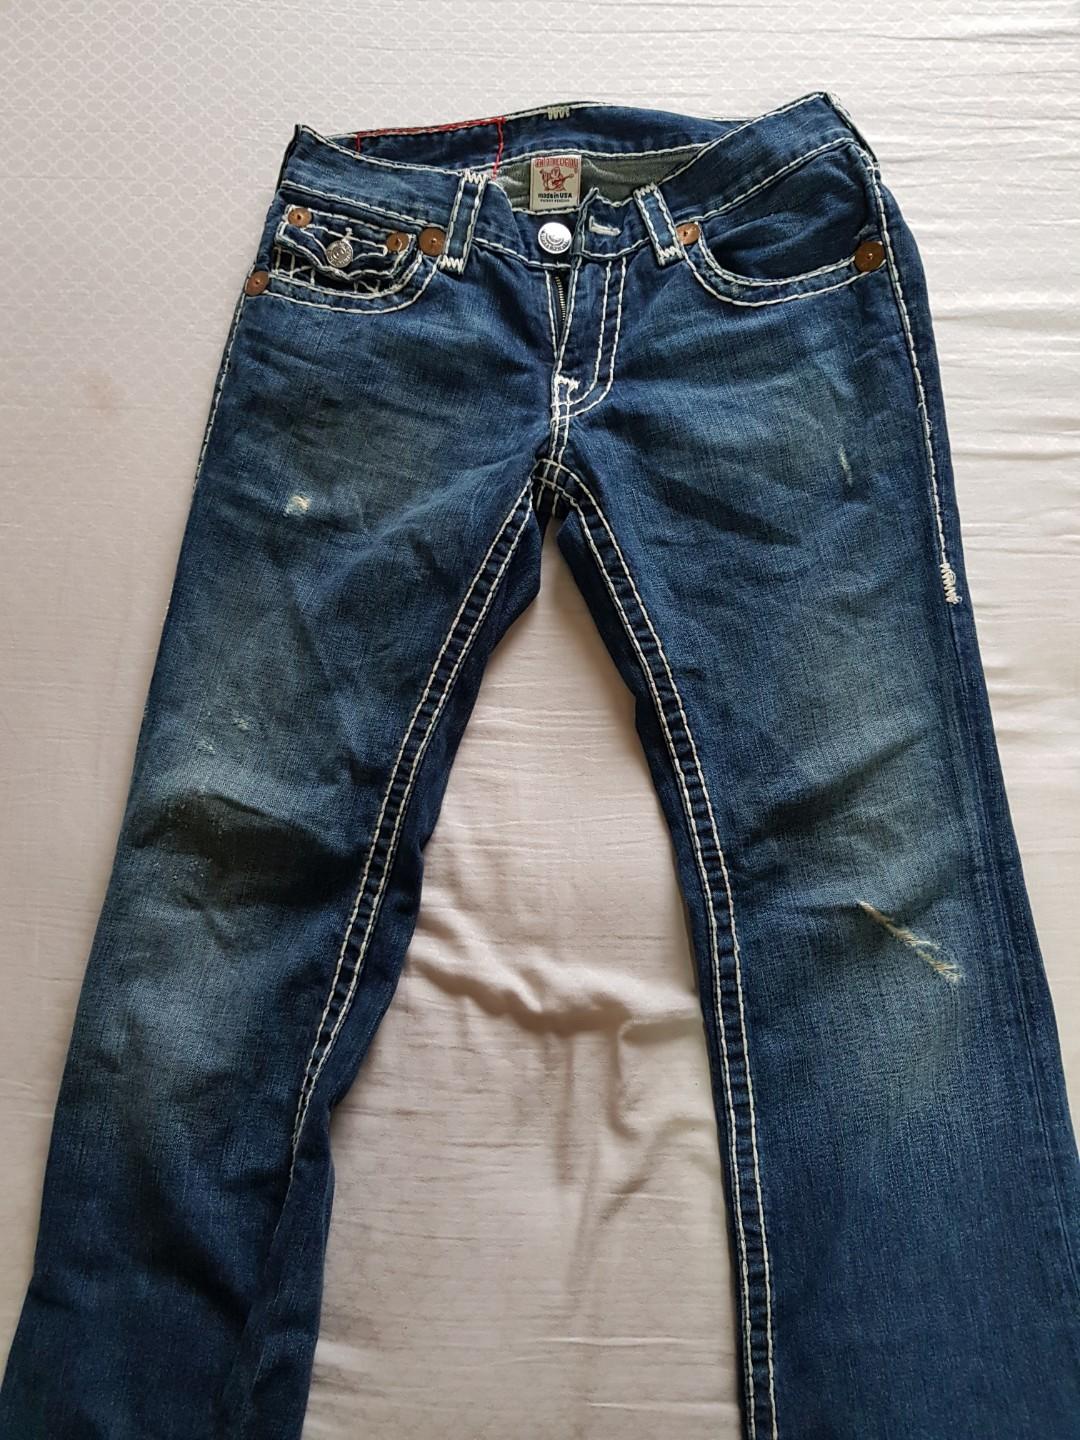 the price of true religion jeans